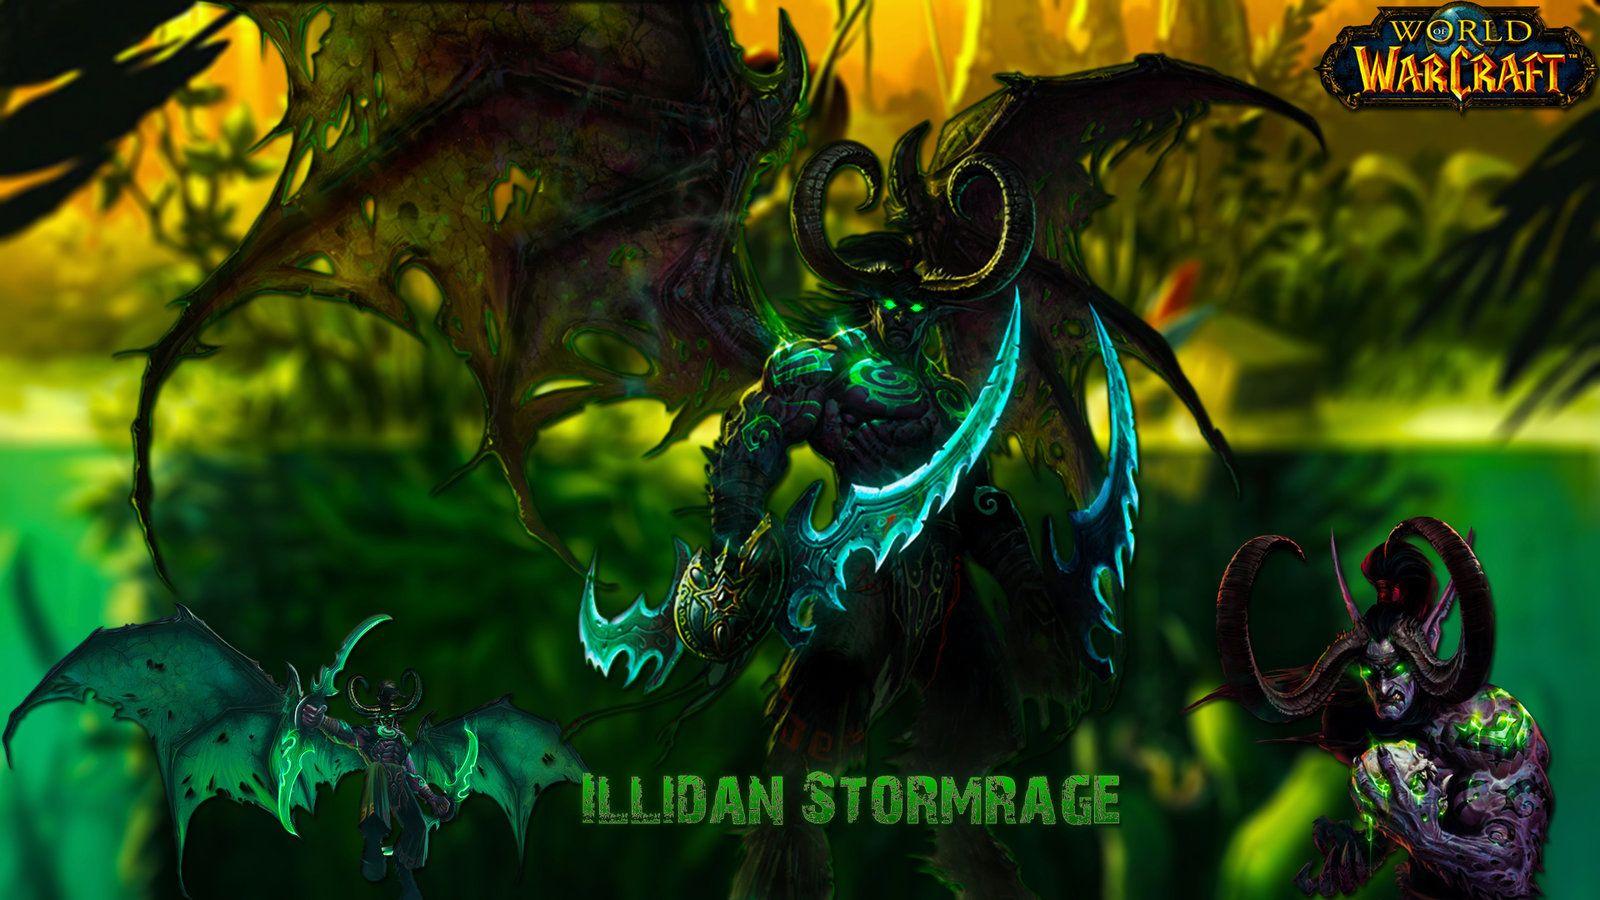 Worl of Warcraft Illidan Stormrage